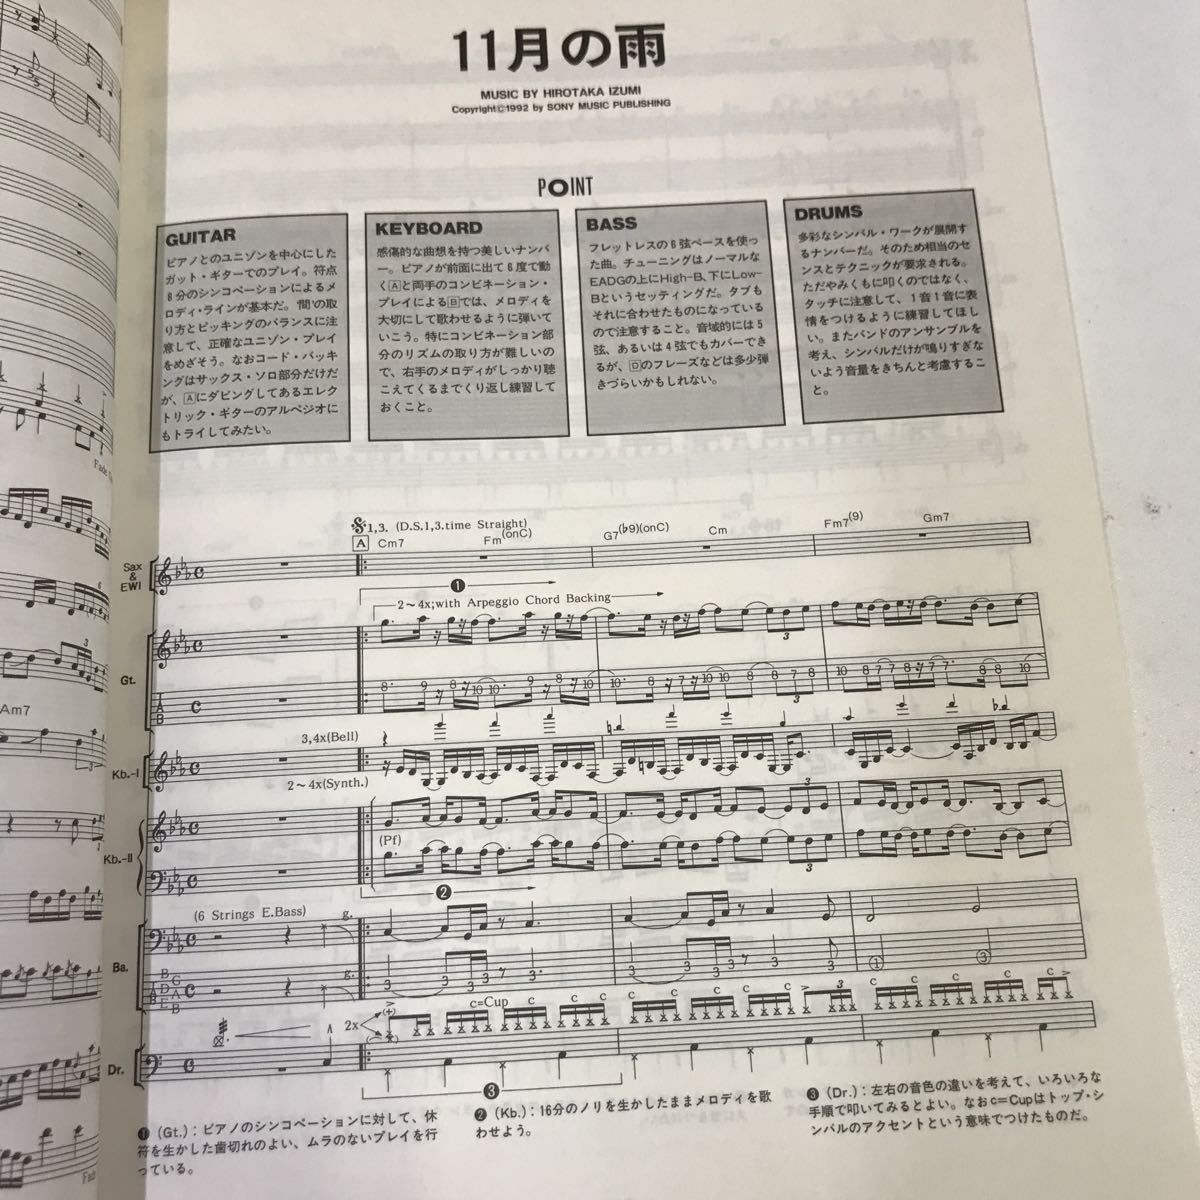 T-SQUARE IMPRESSIVE T-スクエア・インプレッシブ 若松宗雄 シーエス・アーティスツスーパーベスト 1992年 平成4年 初版 楽譜